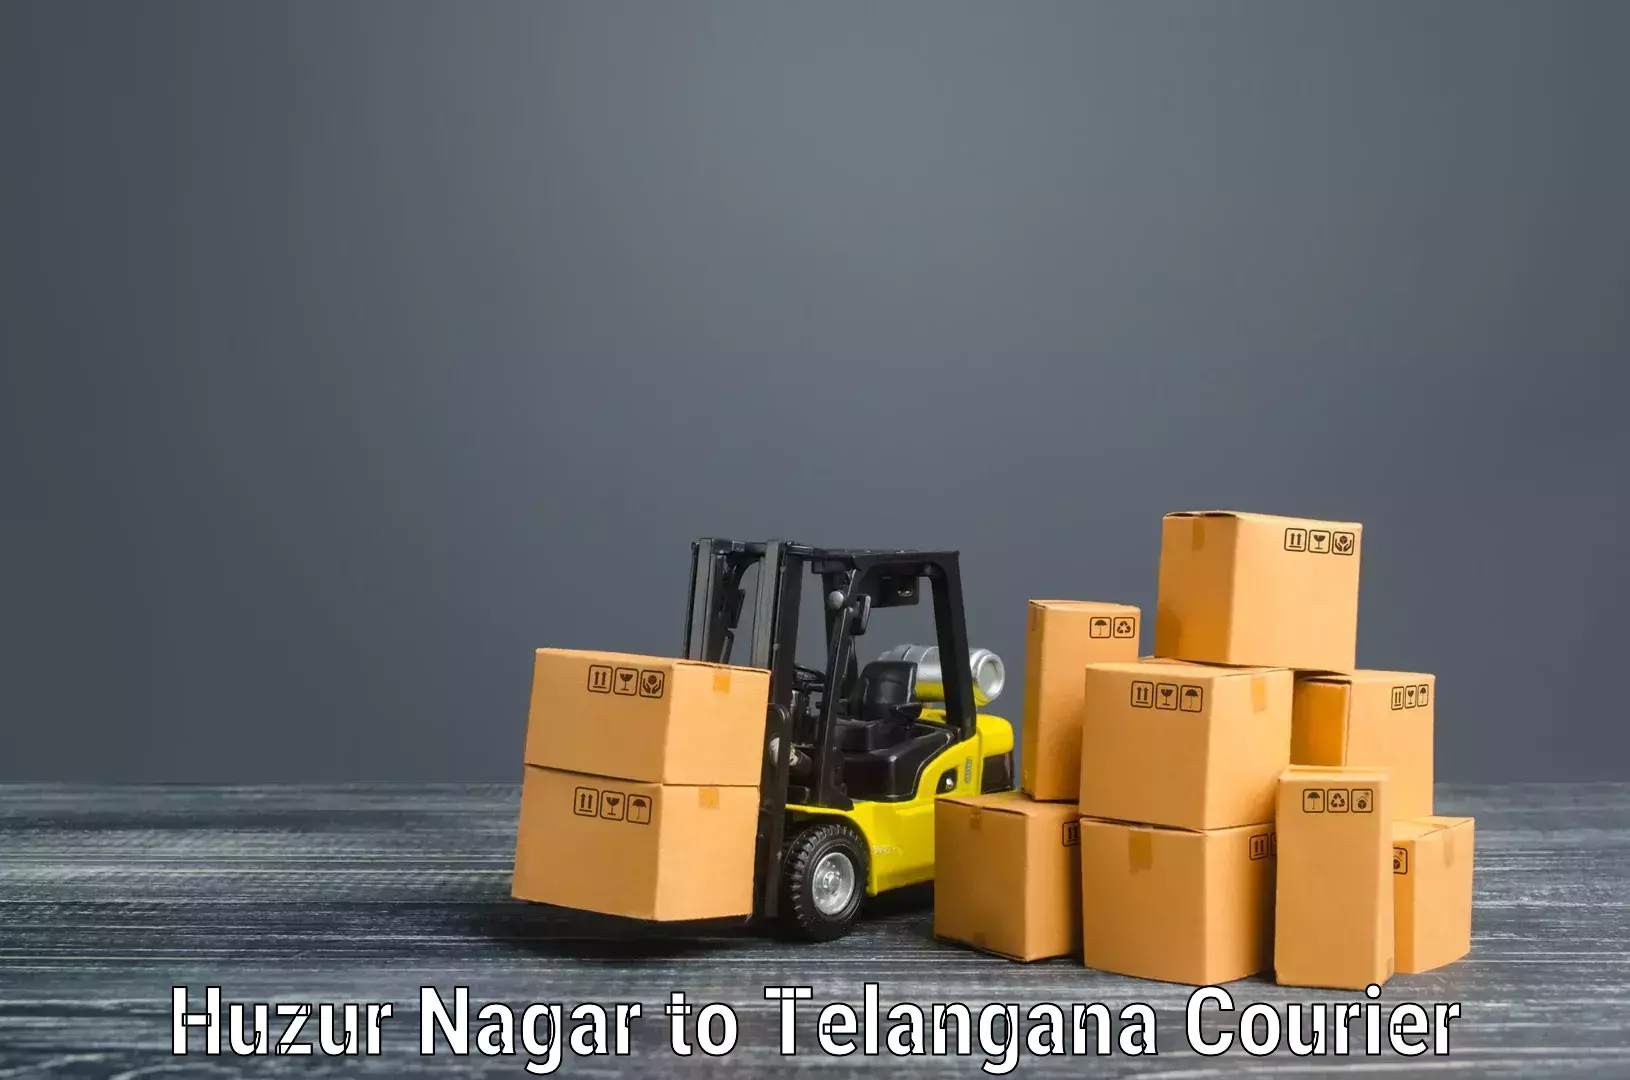 Furniture transport company Huzur Nagar to Tadvai